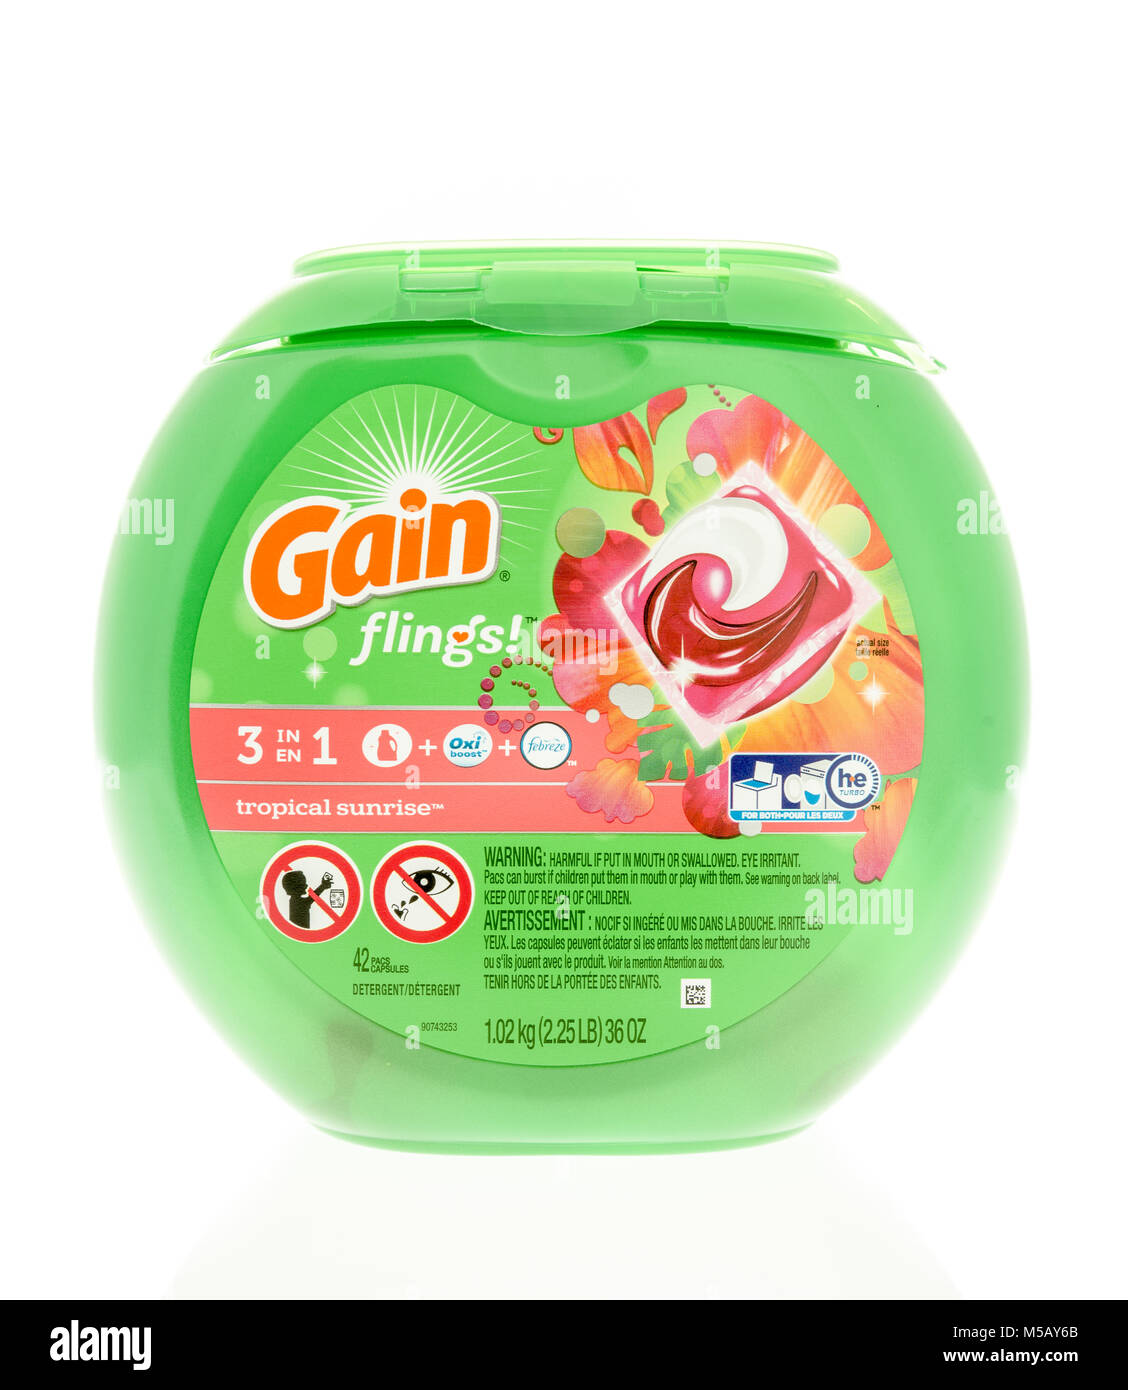 https://c8.alamy.com/comp/M5AY6B/winneconne-wi-19-november-2017-a-package-of-gain-flings-laundry-detergent-M5AY6B.jpg